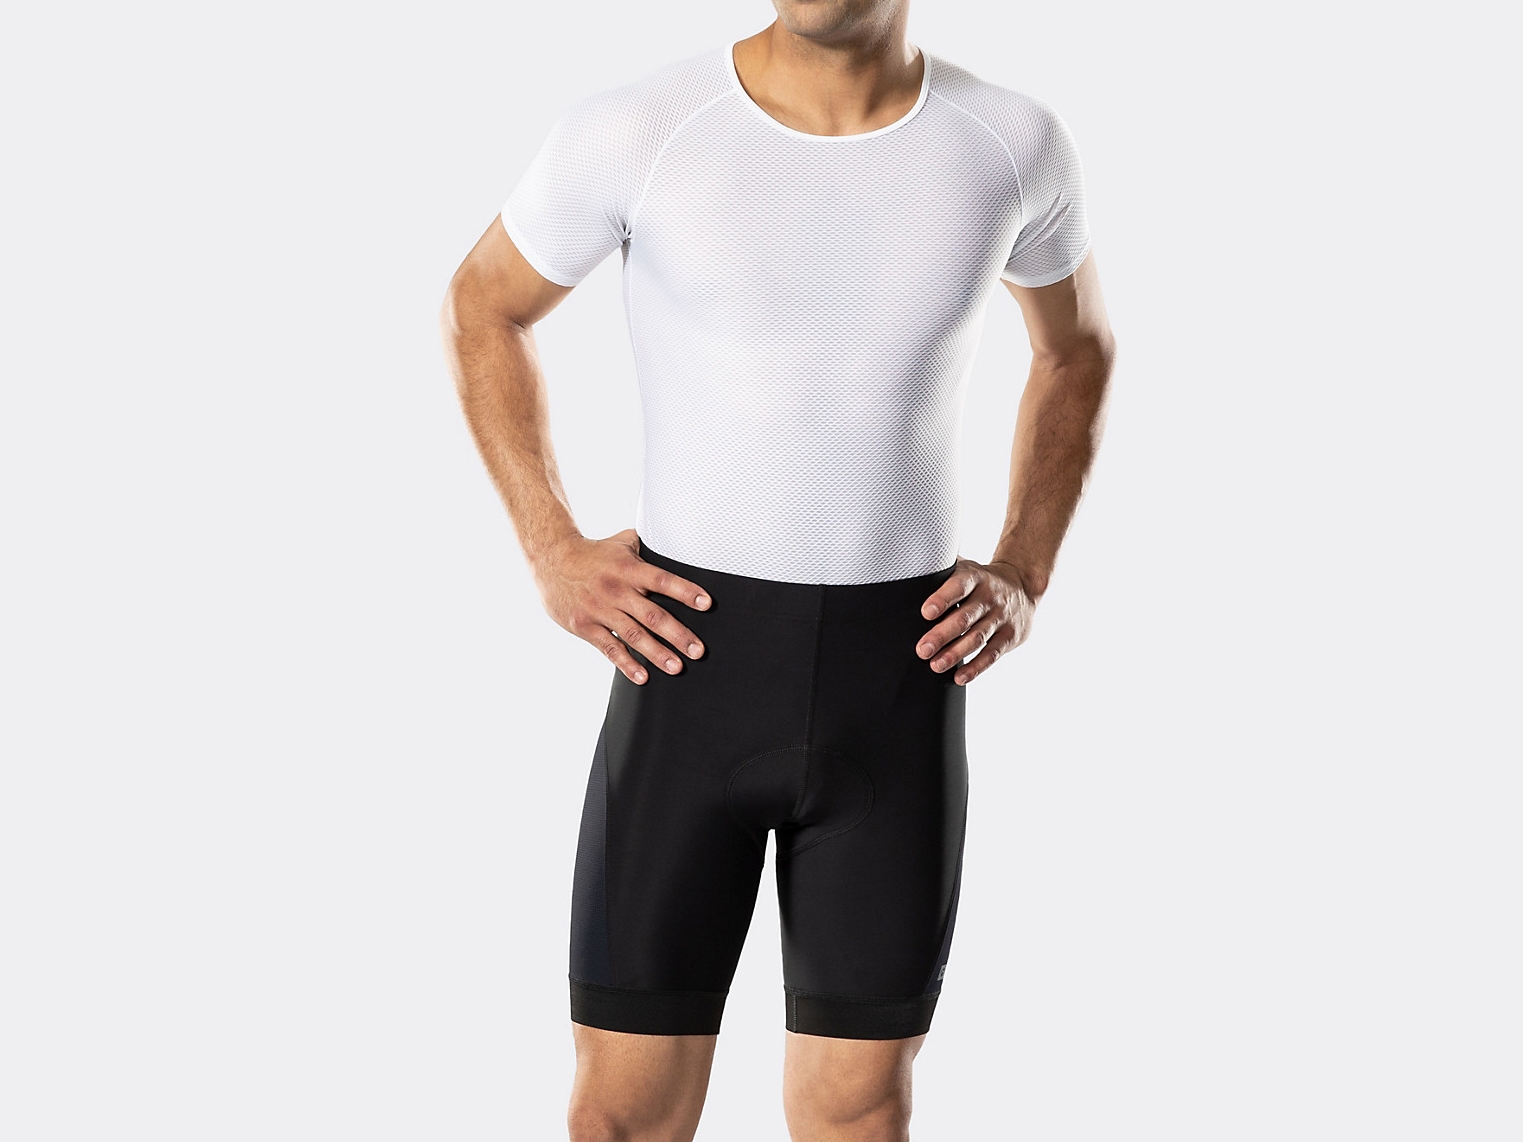 bontrager men's cycling shorts